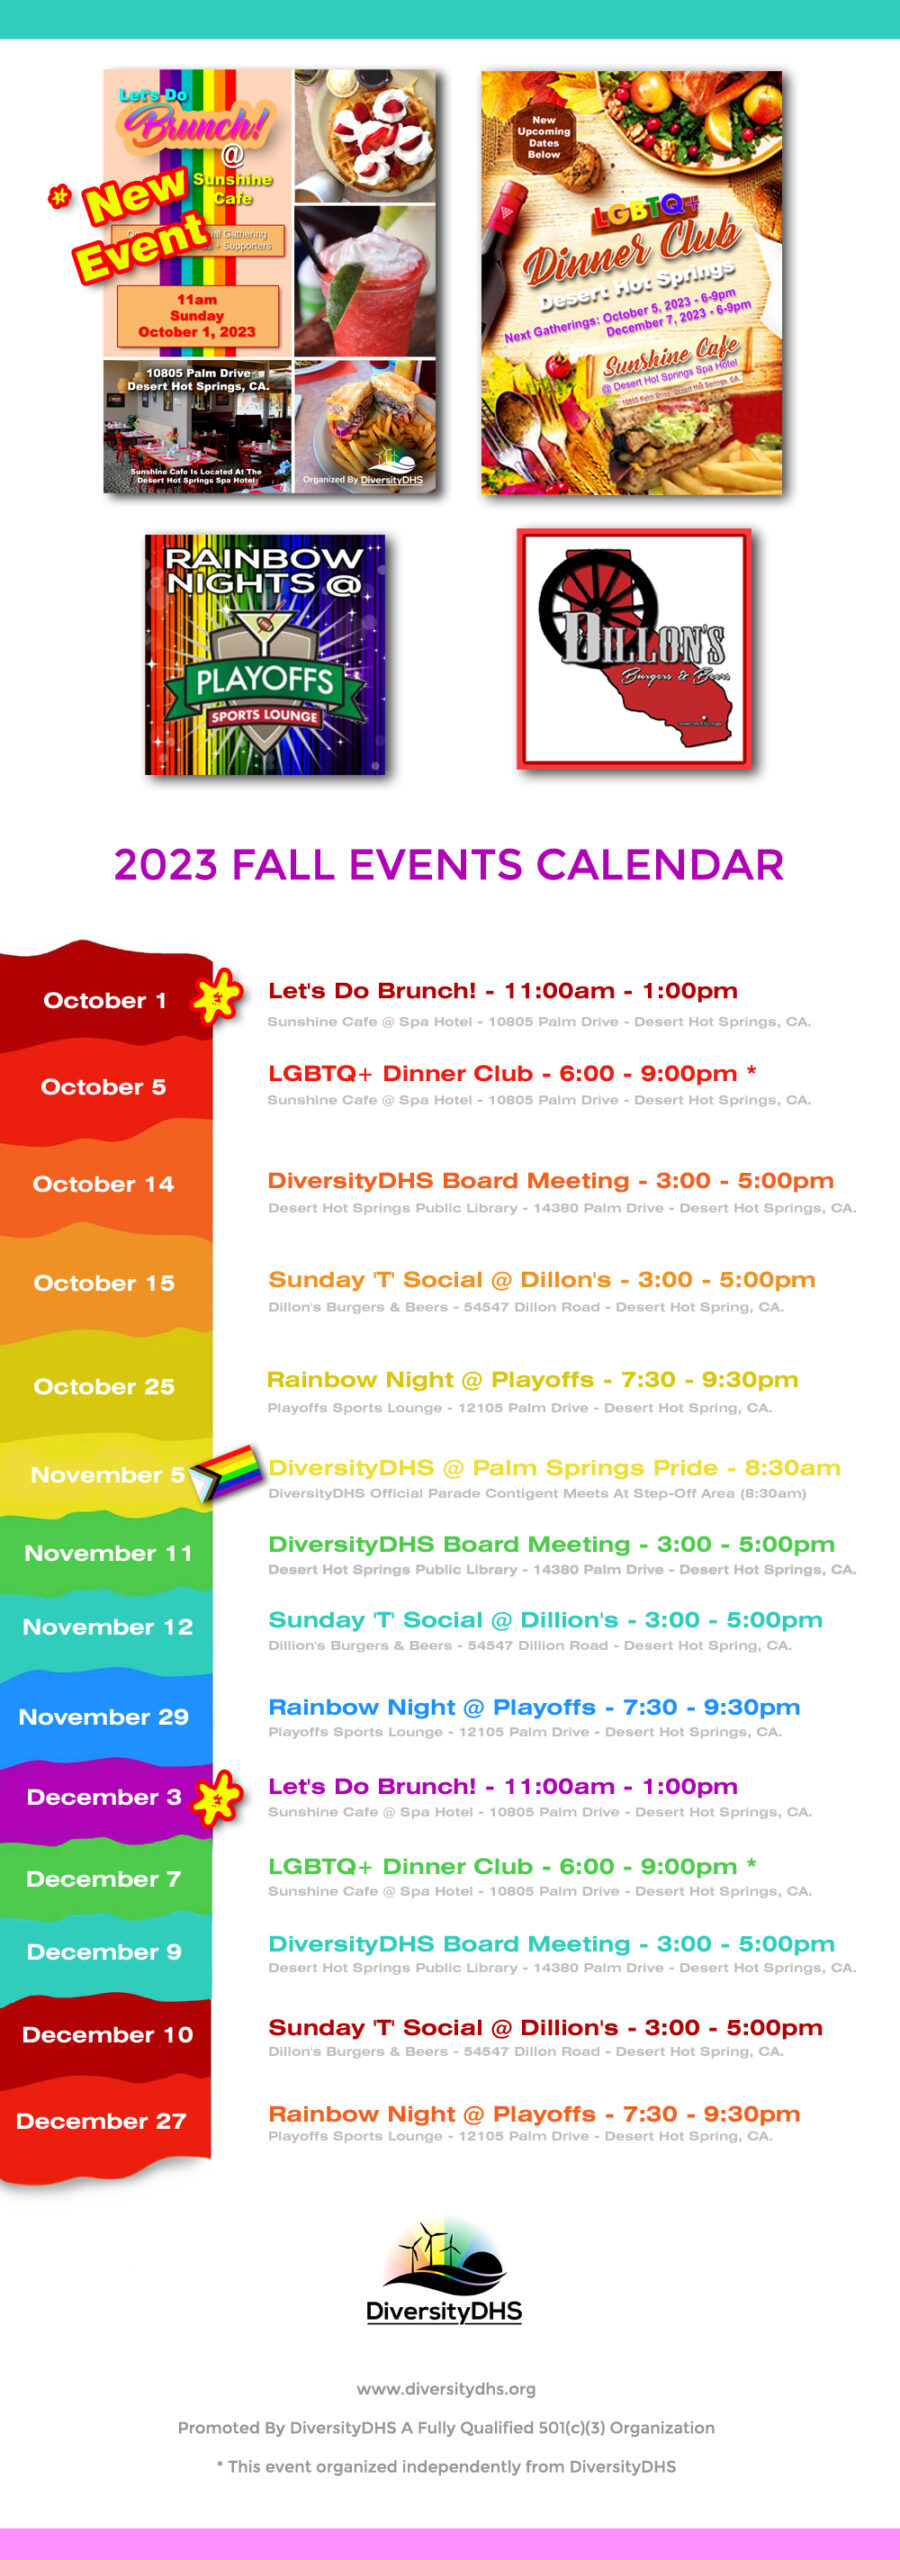 DiversityDHS Fall 2023 Events Calendar